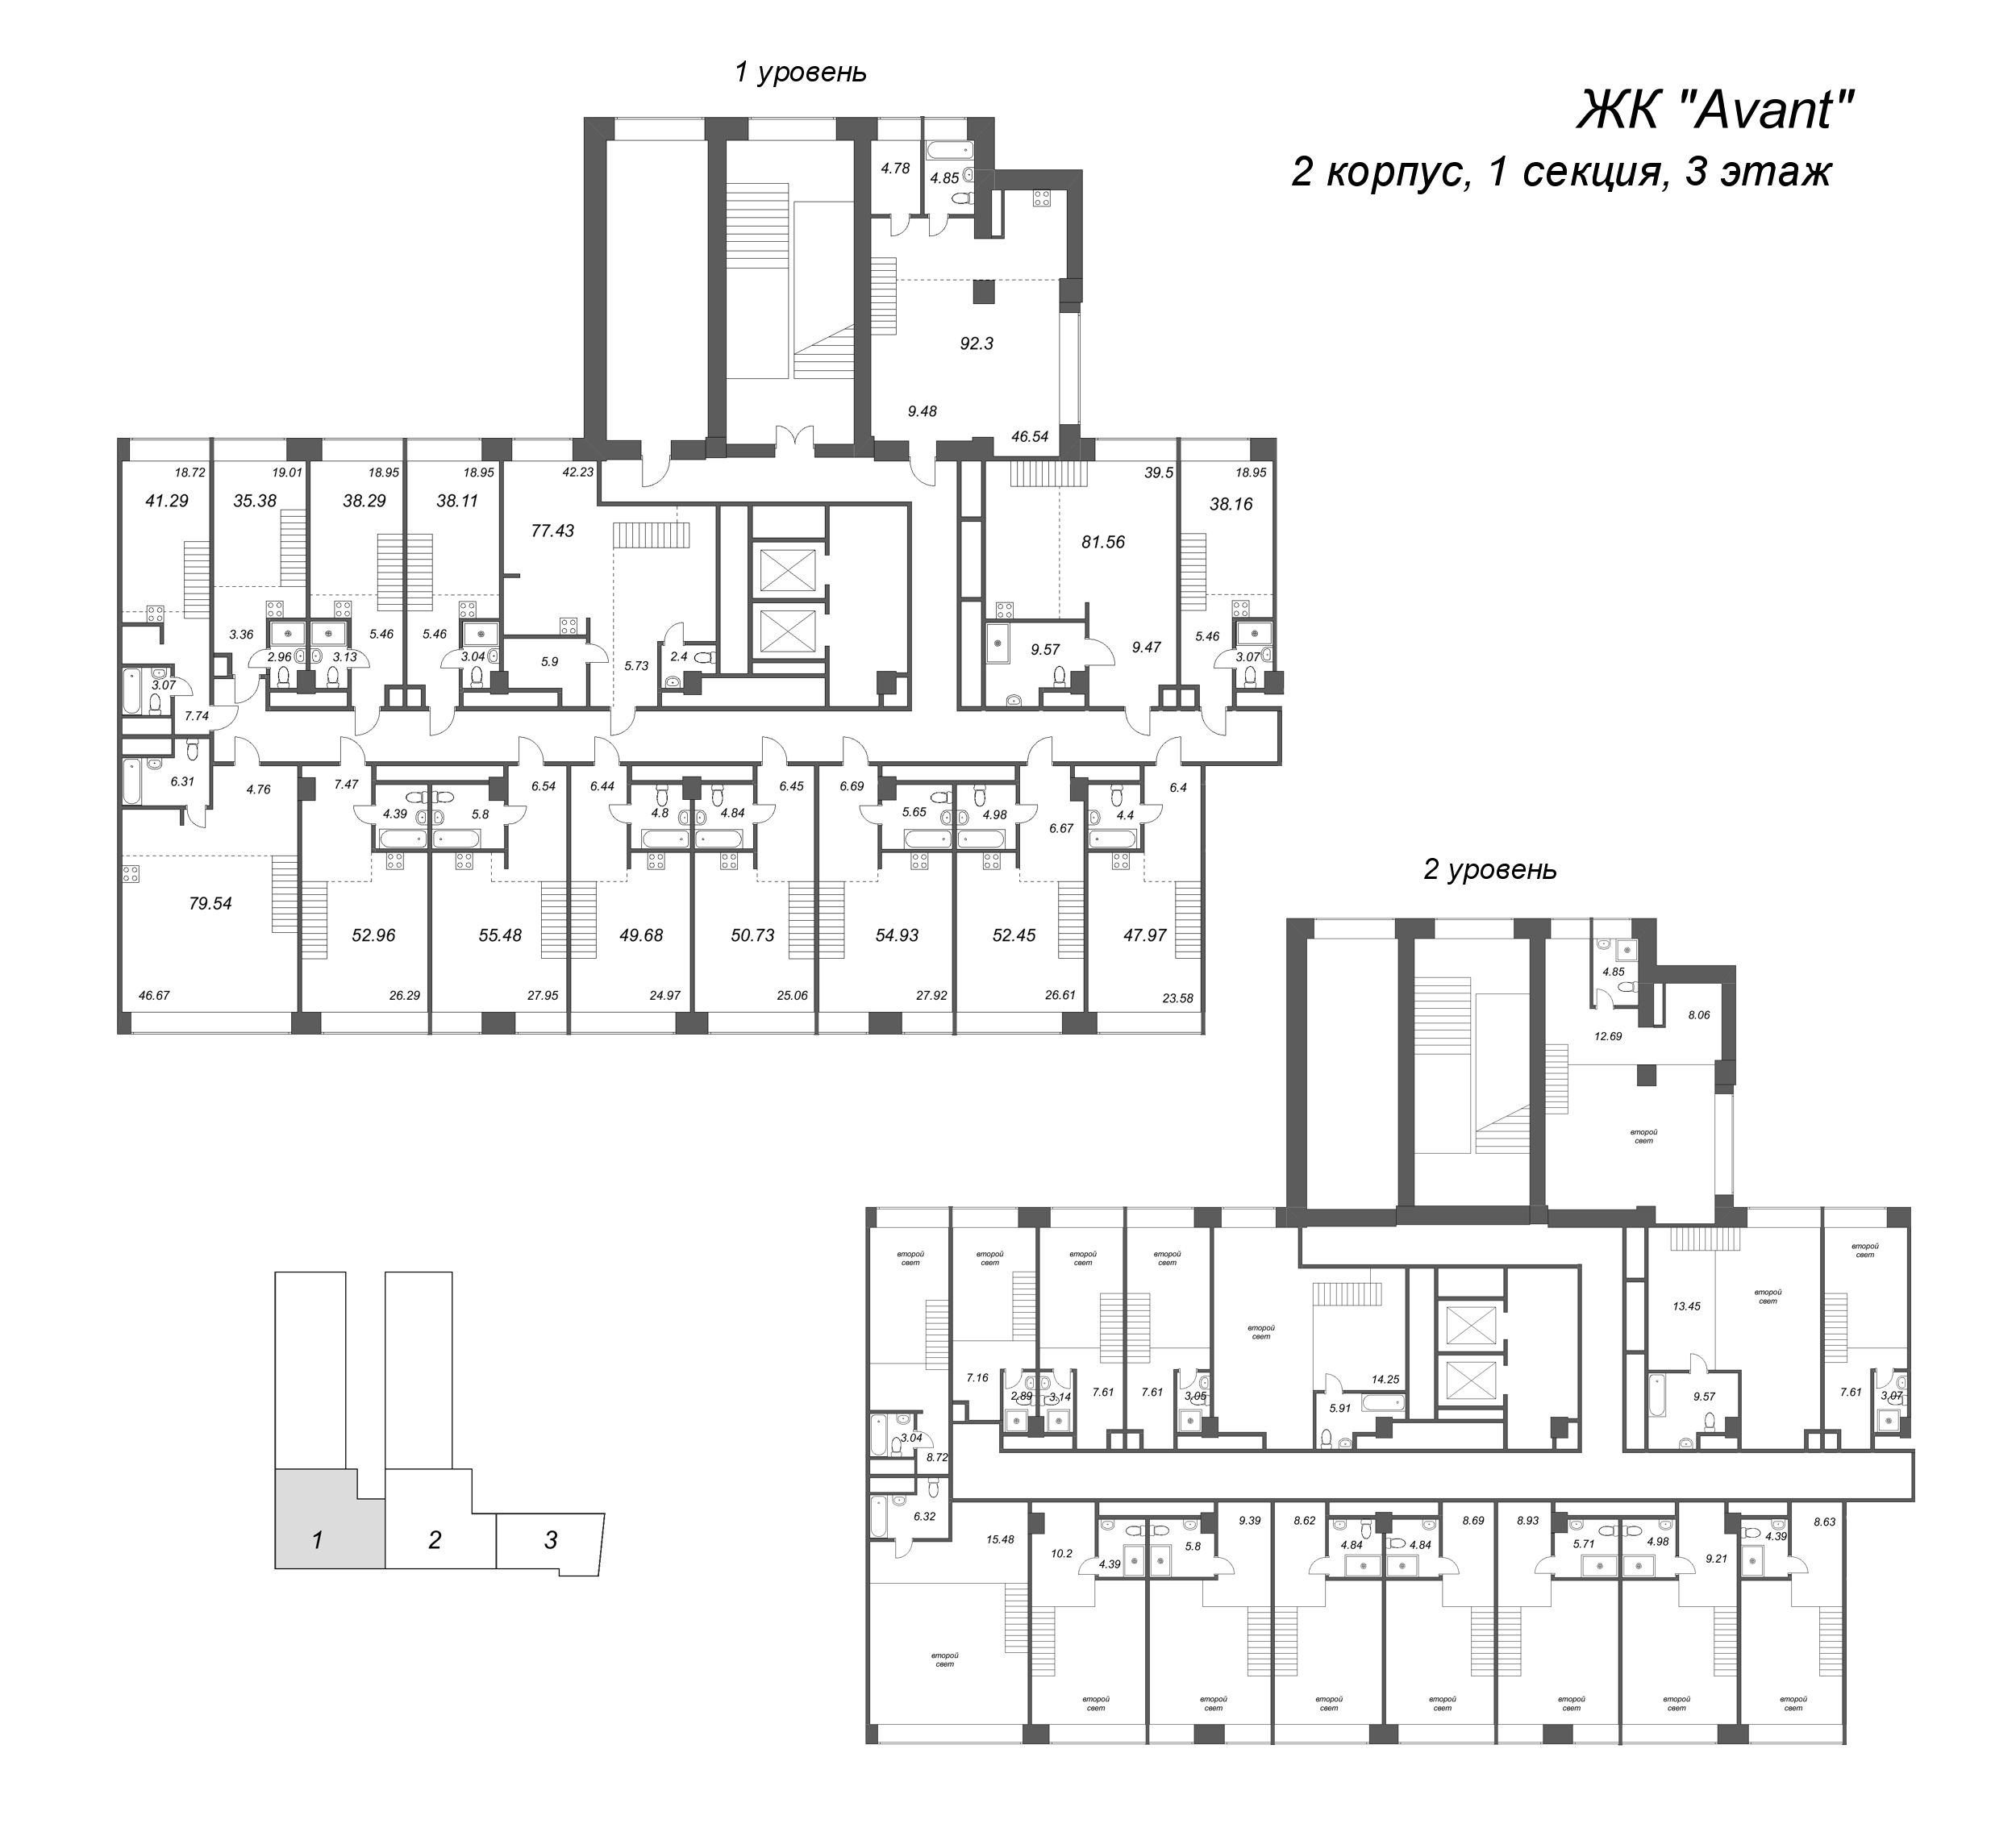 2-комнатная (Евро) квартира, 49.68 м² - планировка этажа